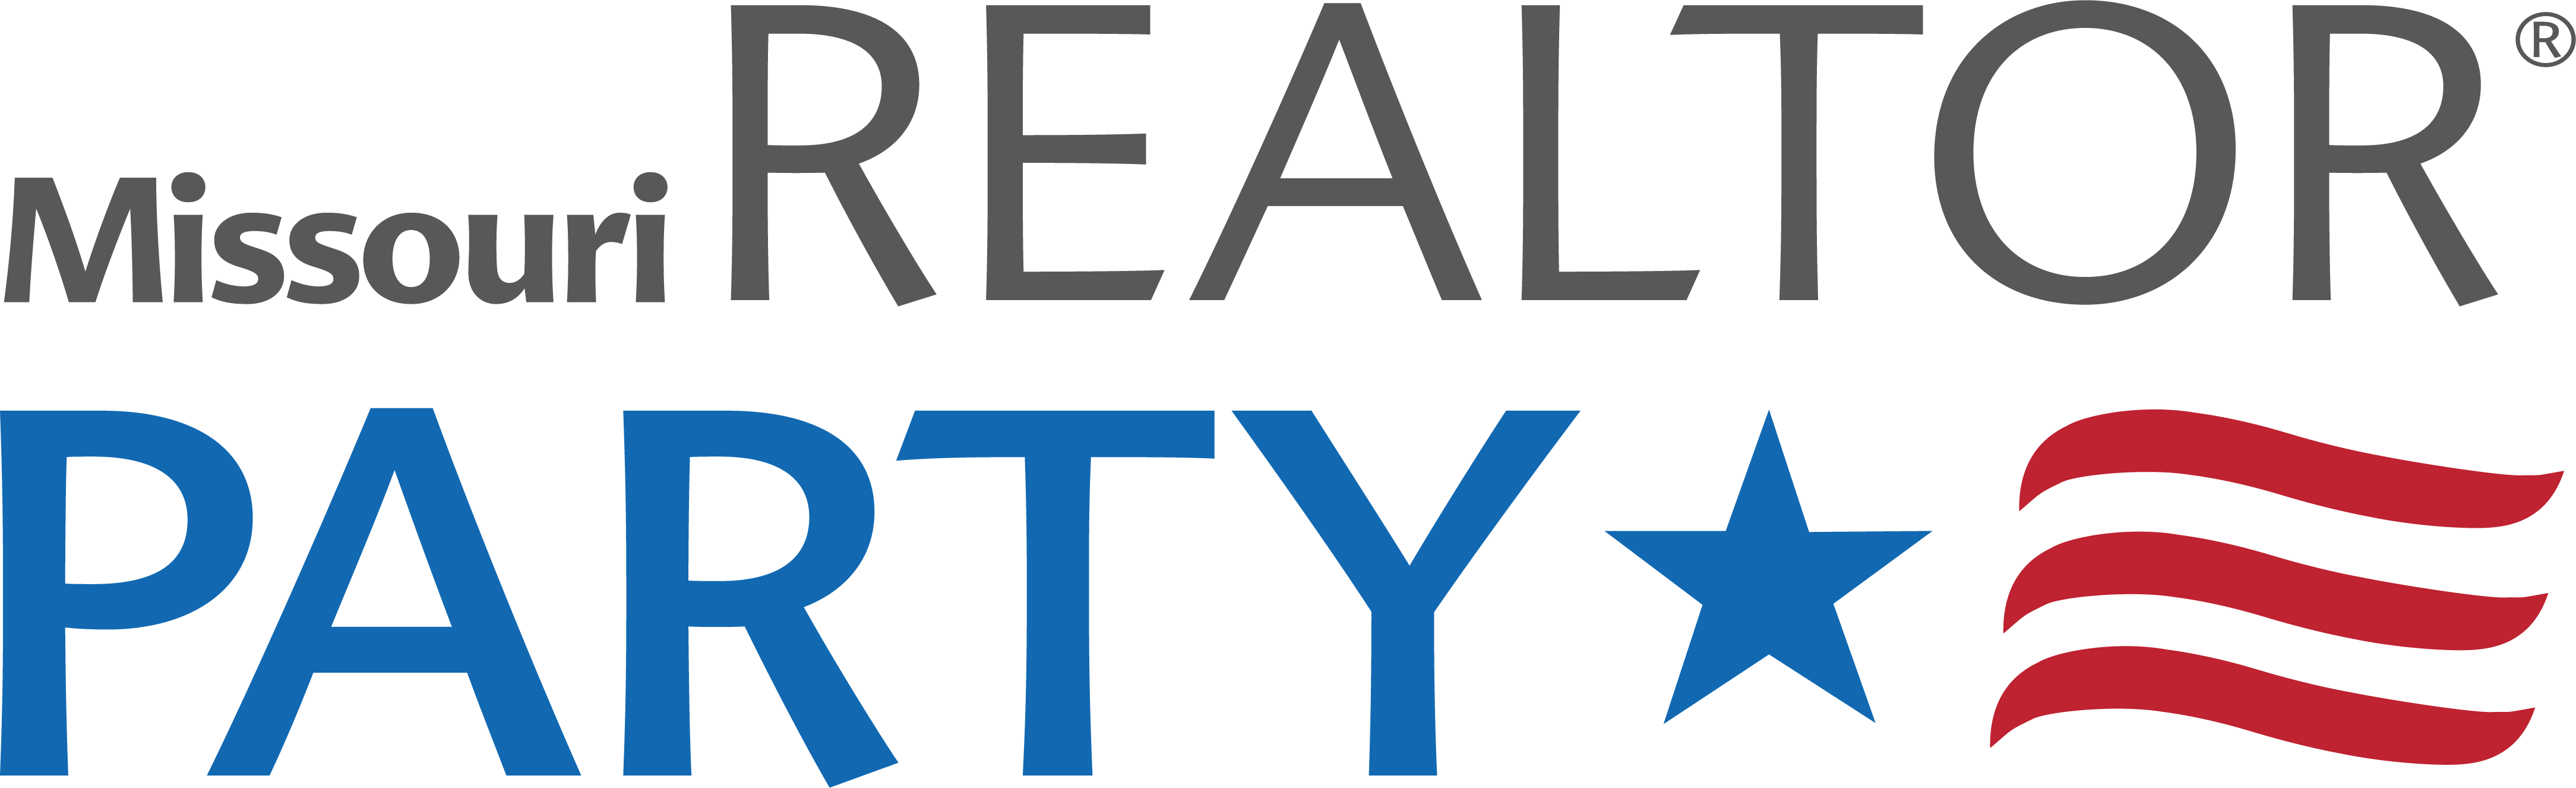 Missouri-REALTOR-Party-Logo